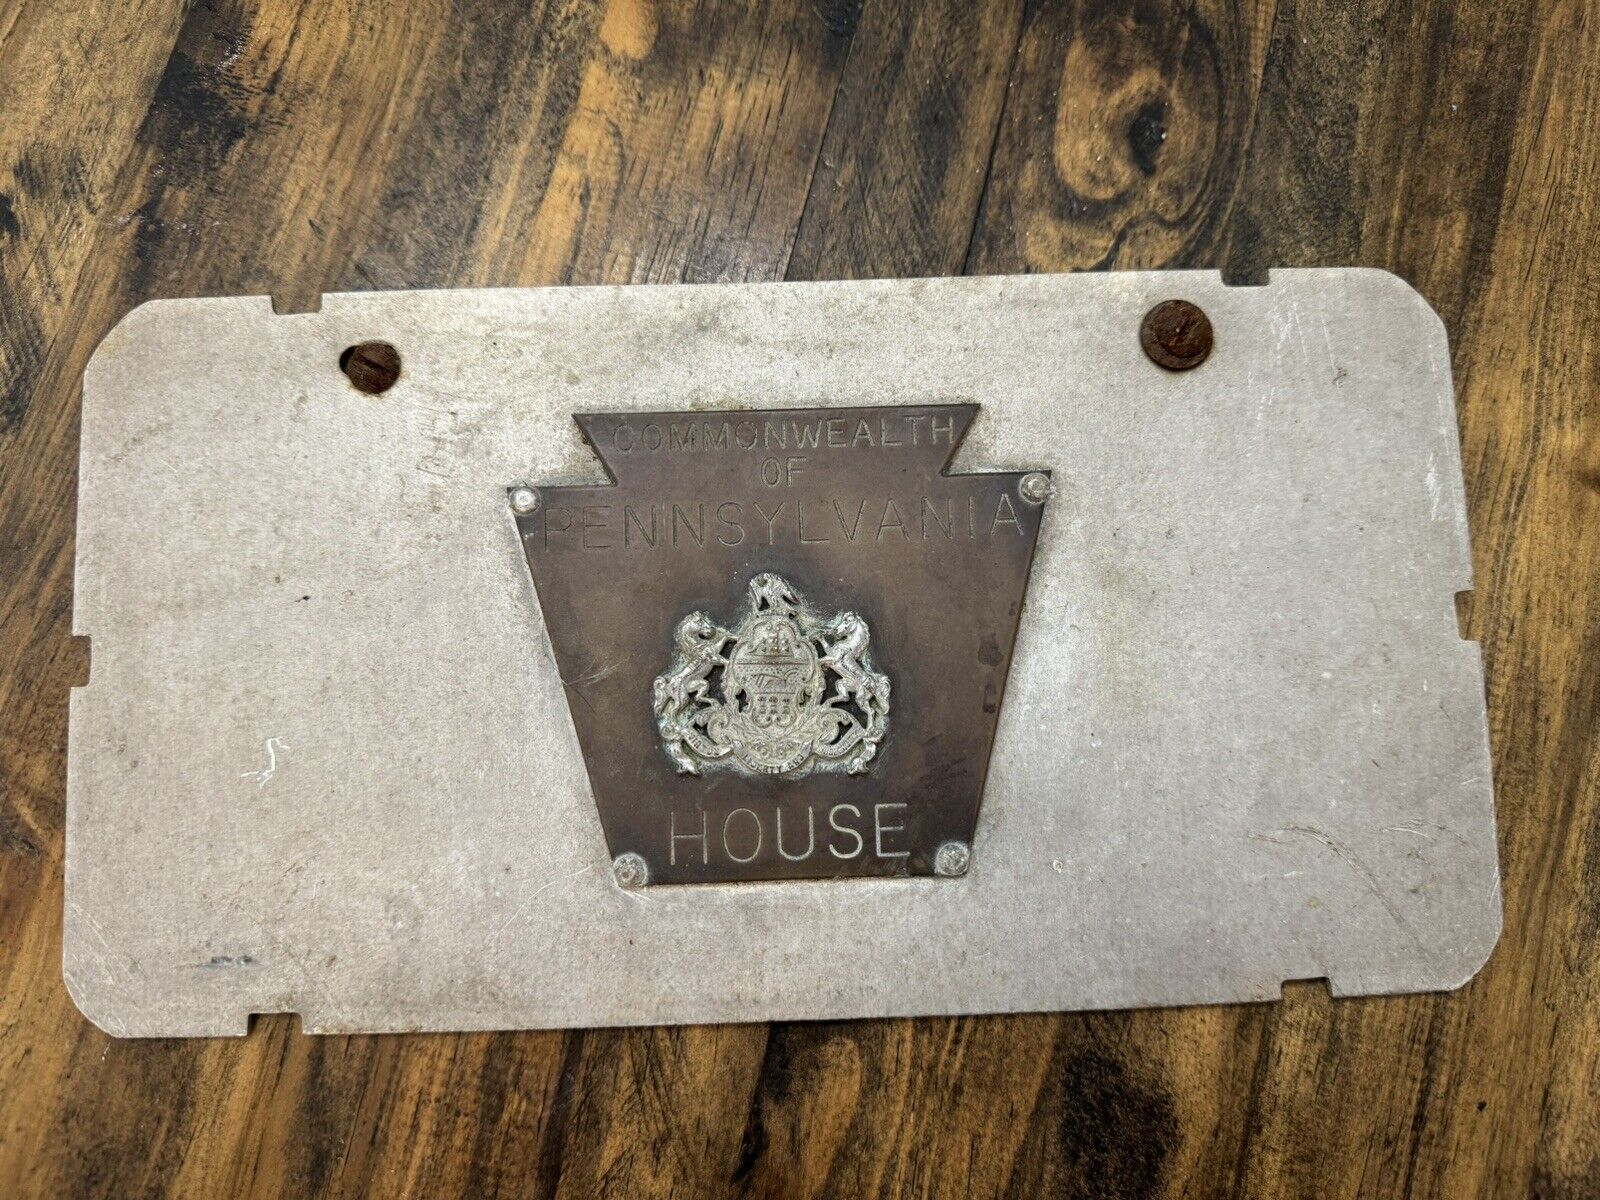 Commonwealth of Pennsylvania House of Representative Brass Steel License Plate